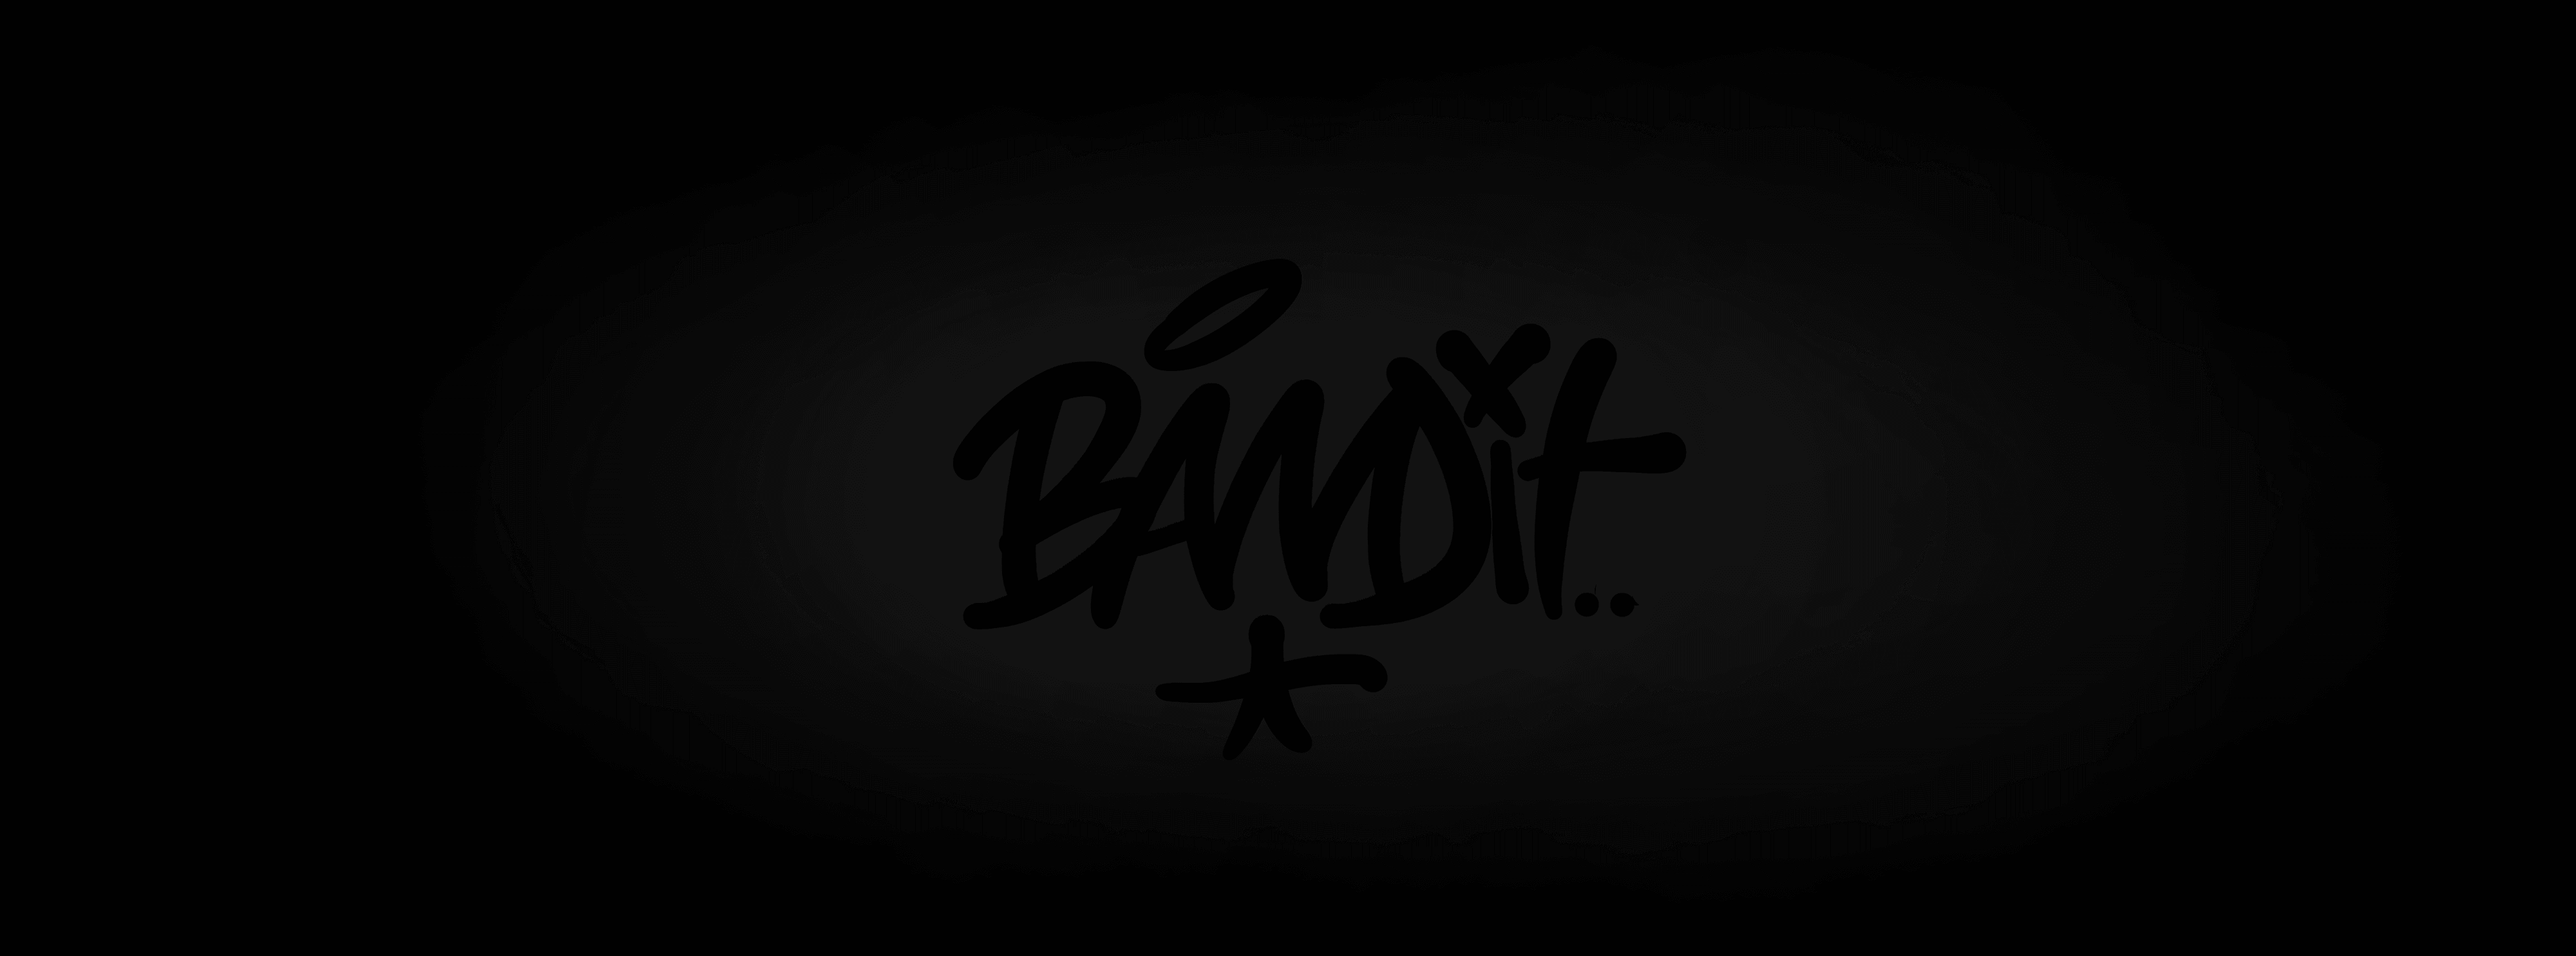 BANDIT-ONE バナー